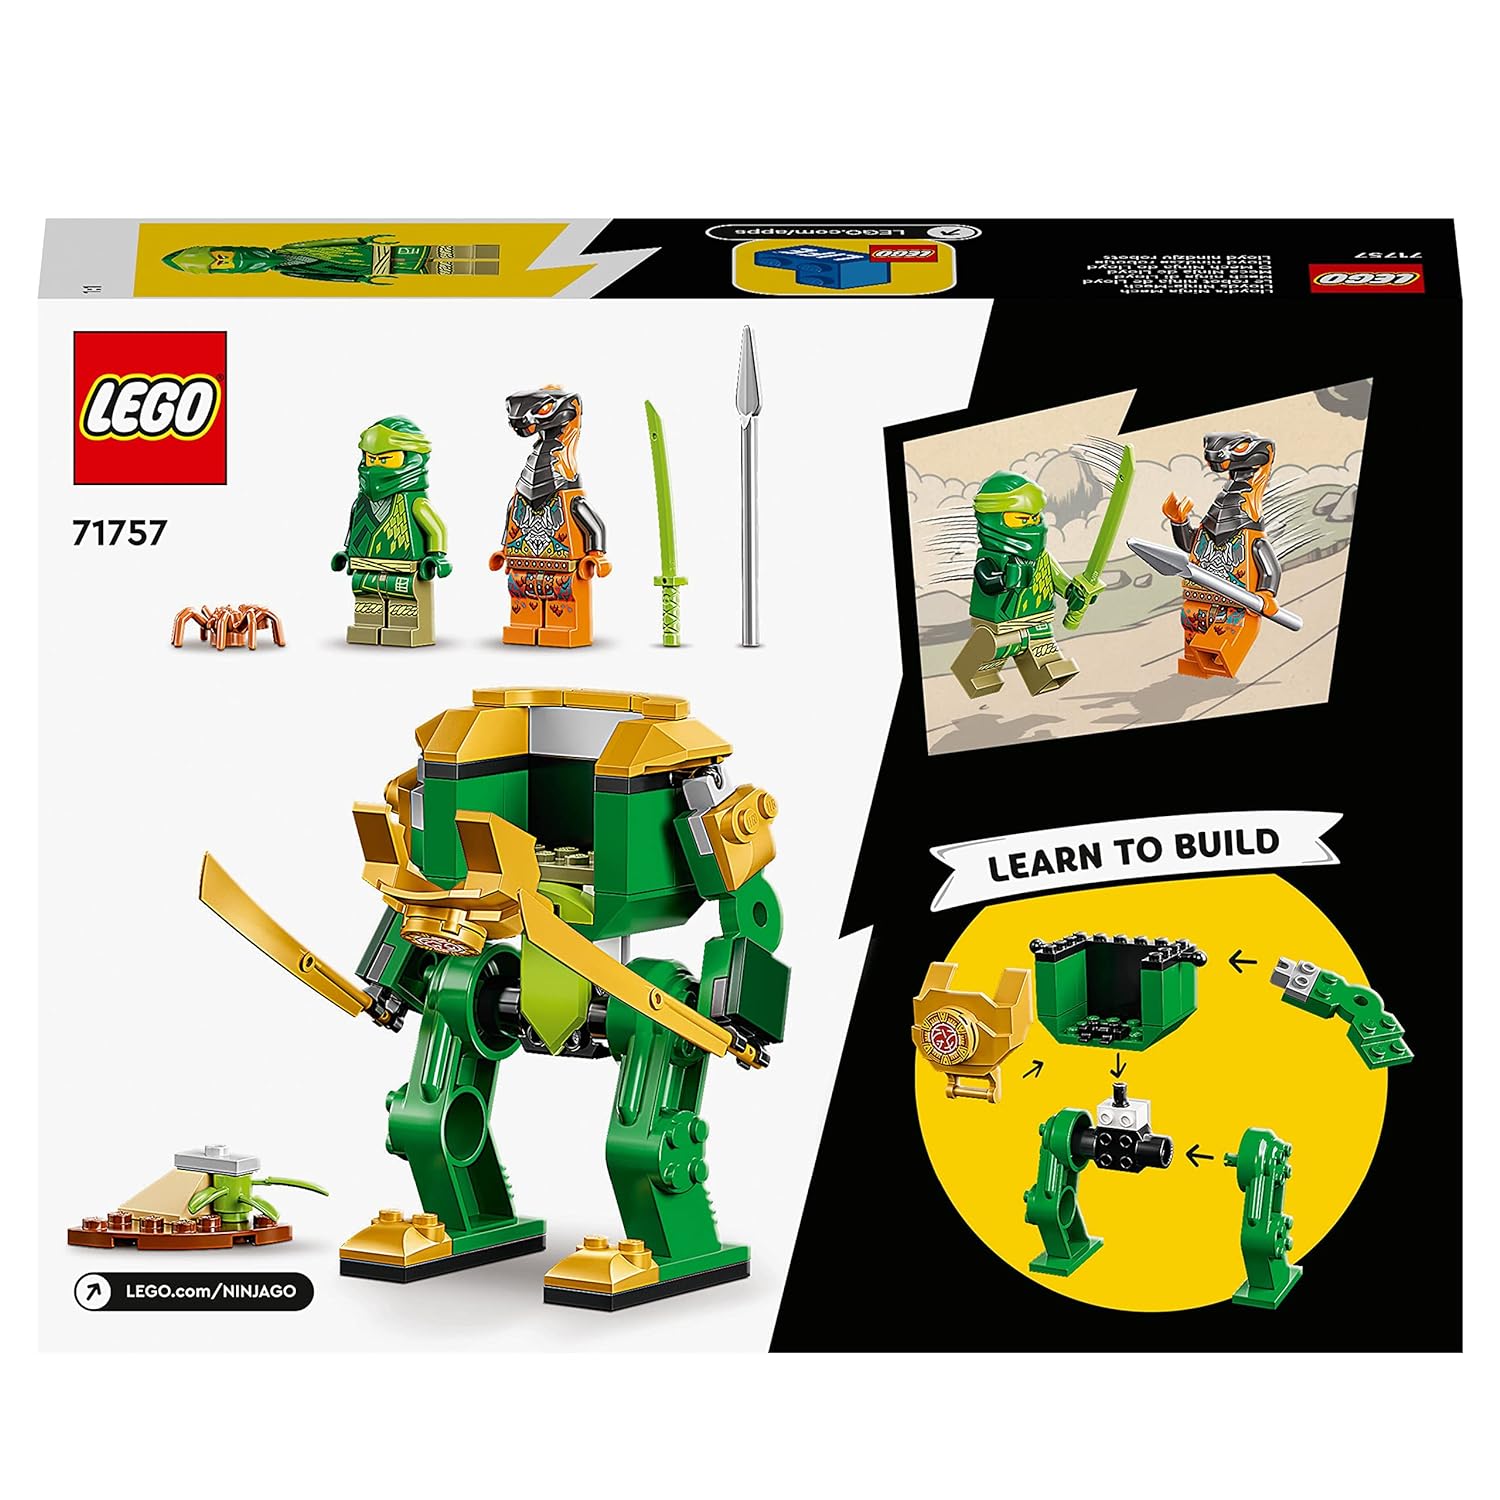 LEGO Ninjago Lloyd’s Ninja Mech Building Kit for Ages 4+